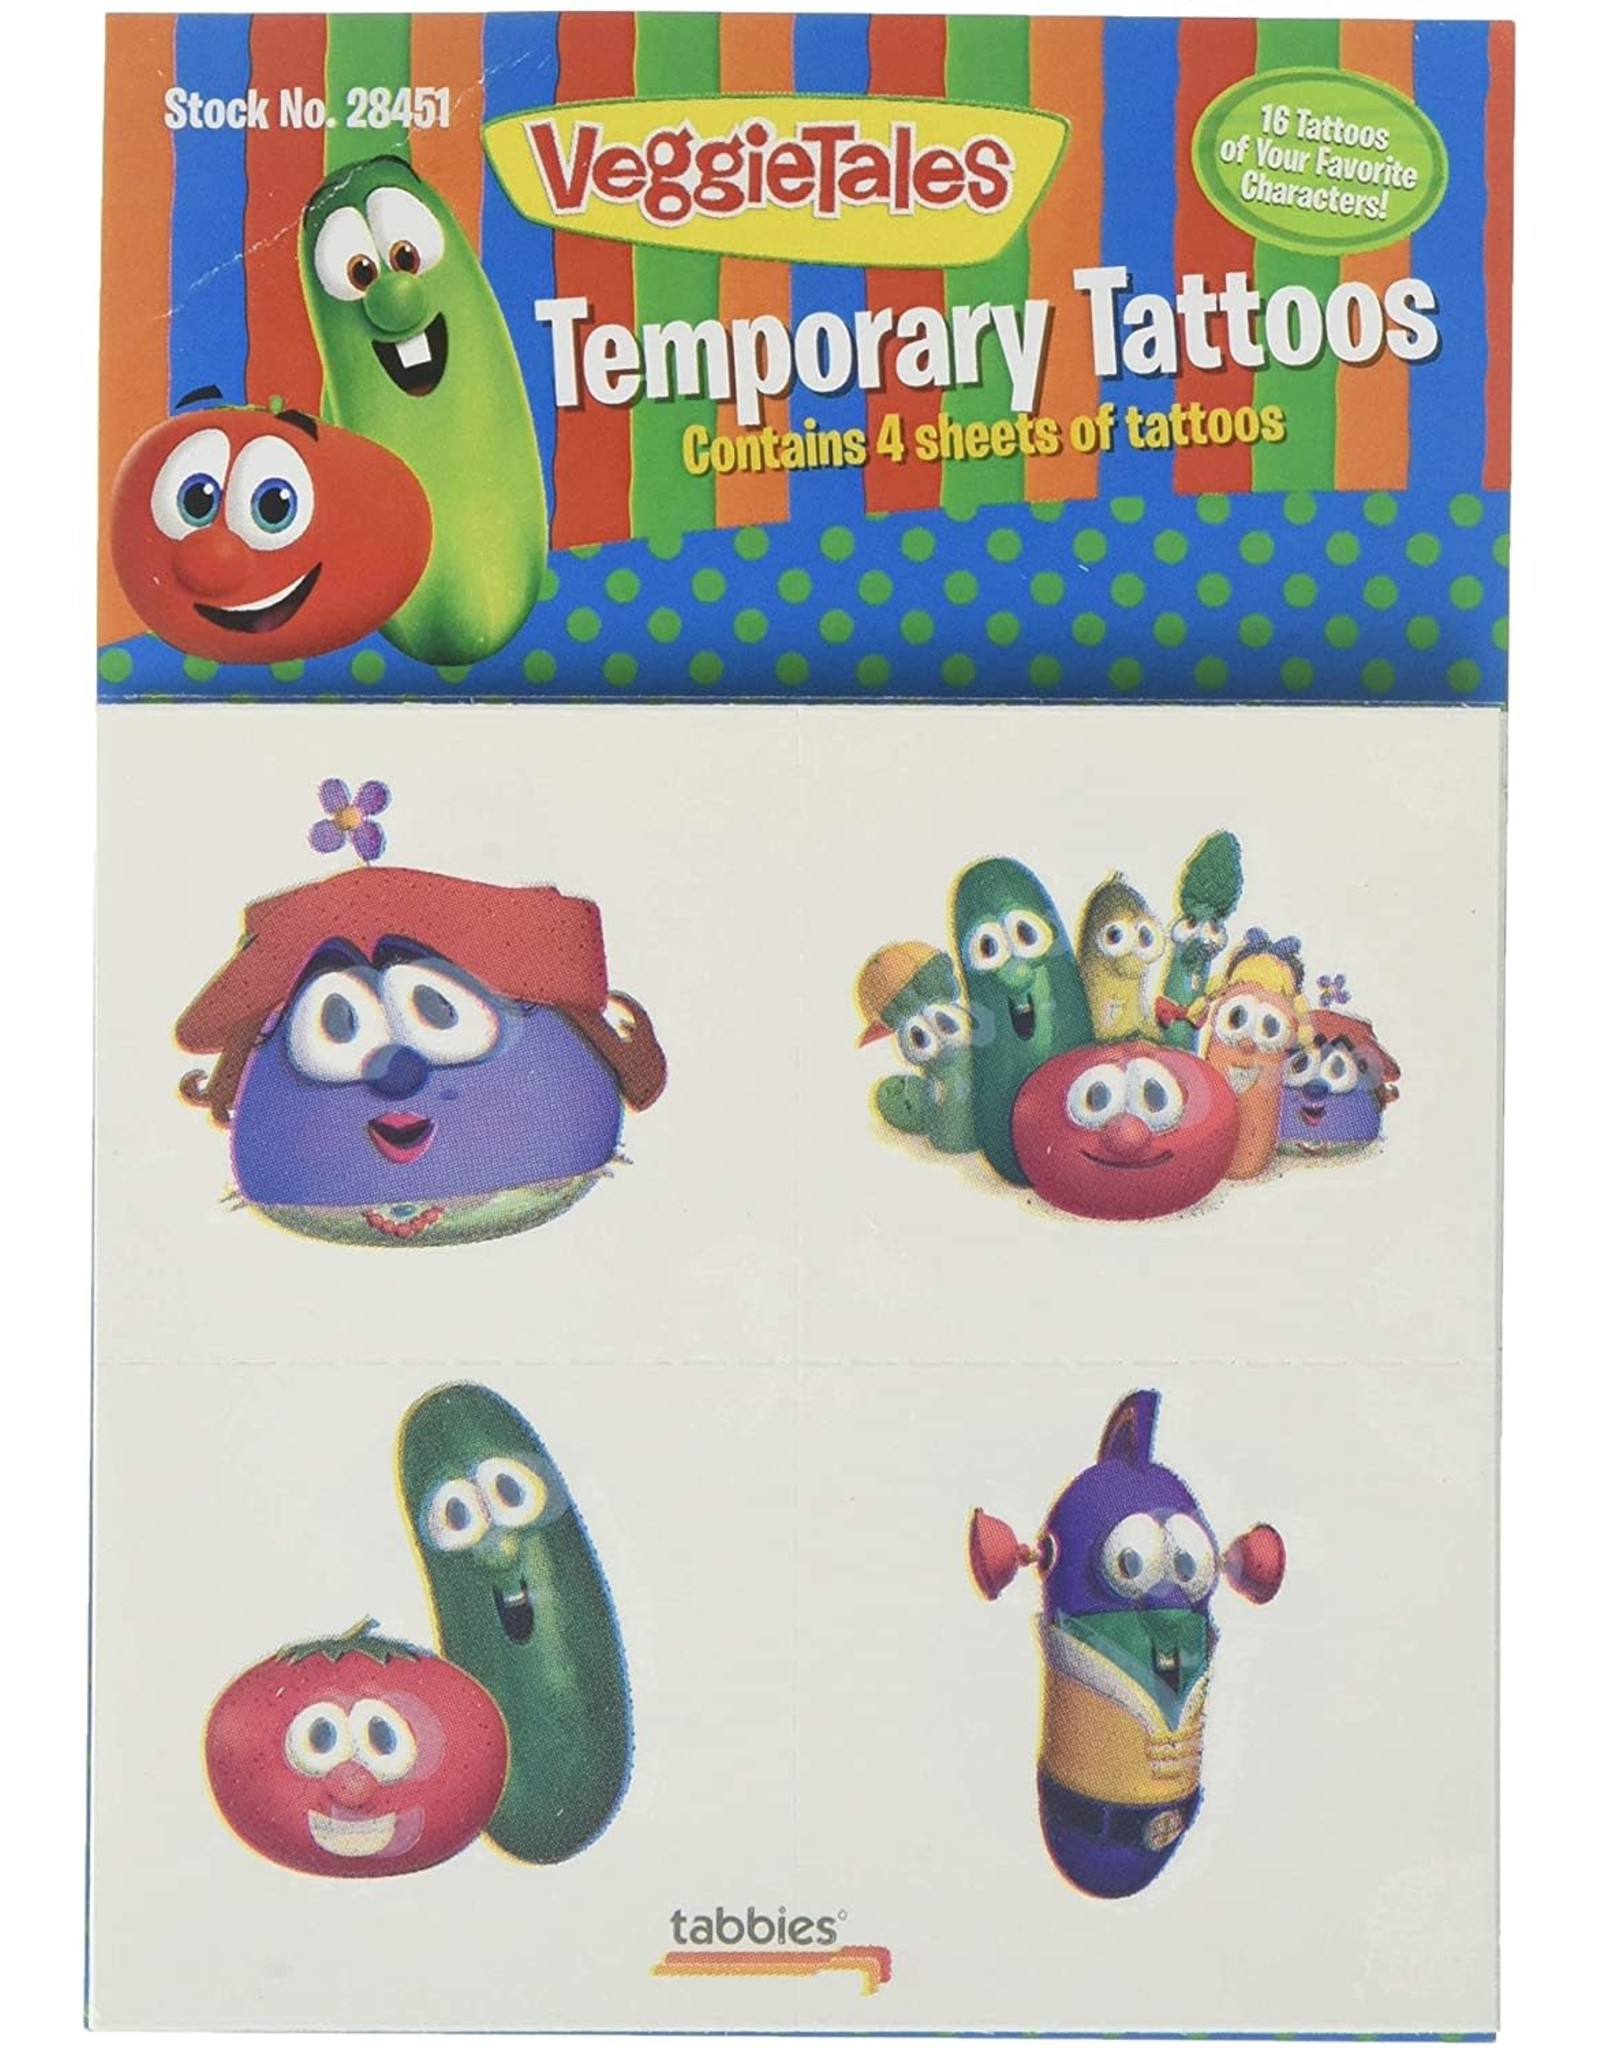 Tabbies VeggieTale Temporary Tattoos